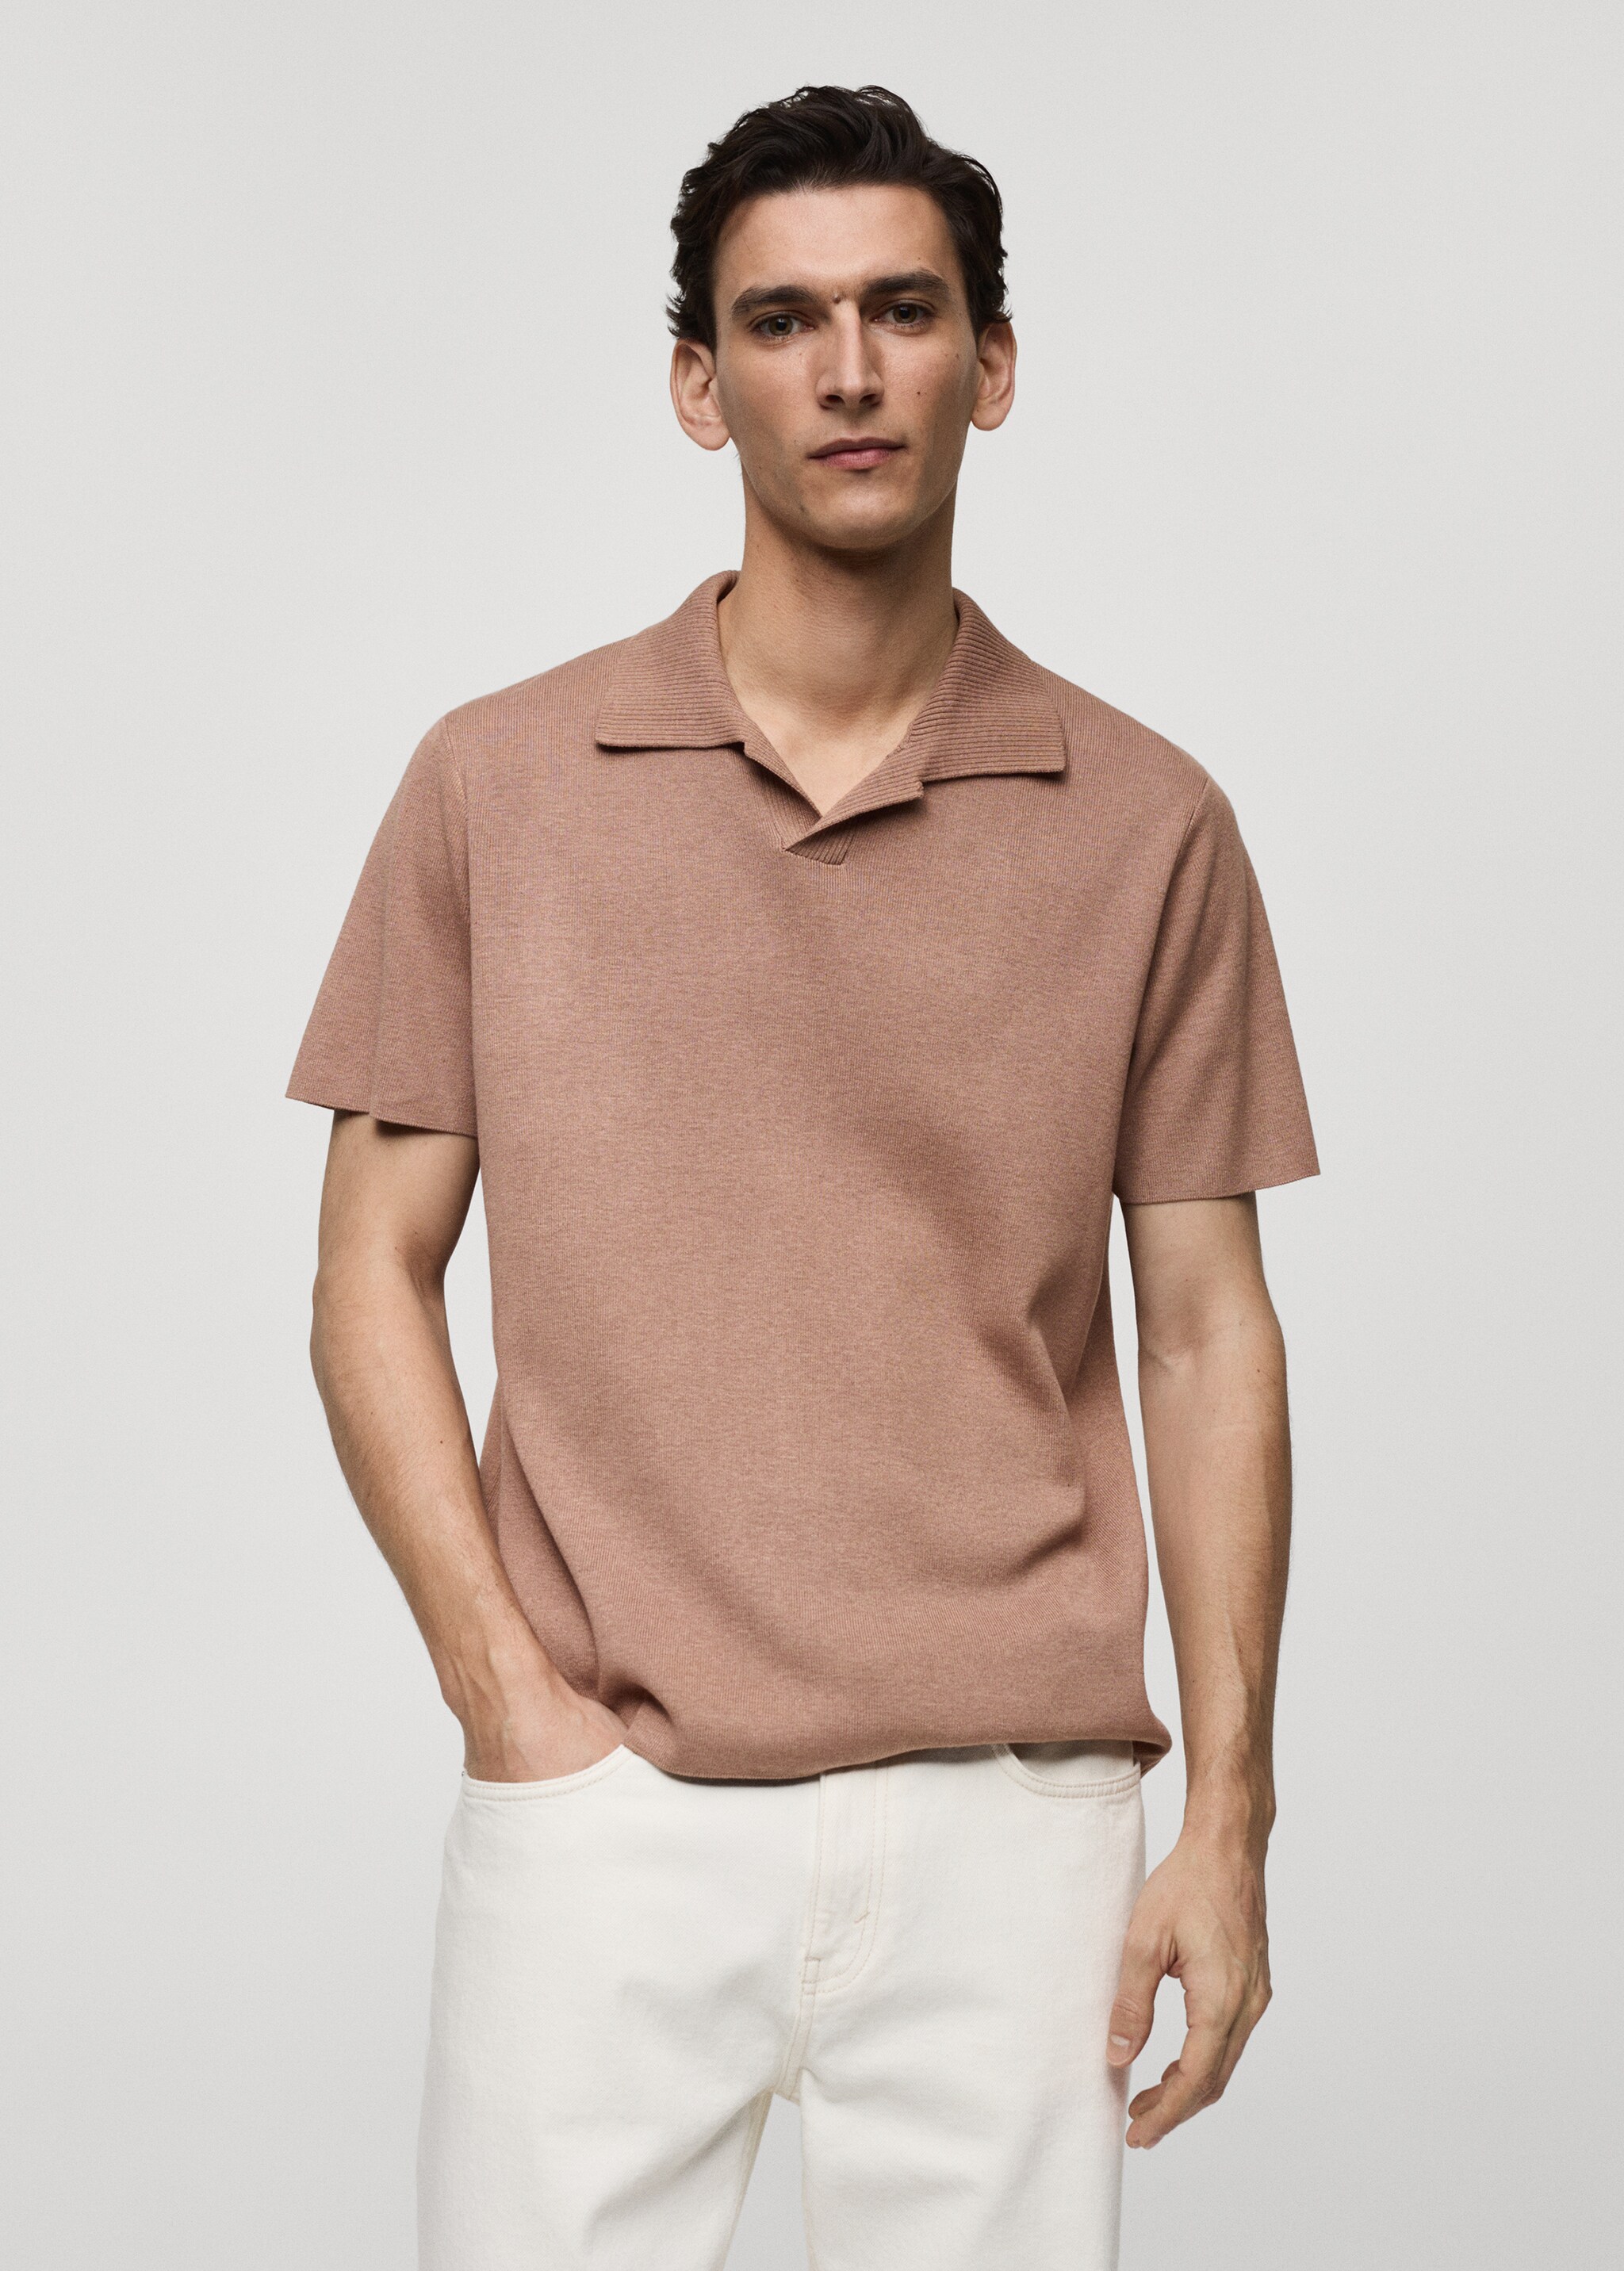 Textured cotton polo shirt - Medium plane